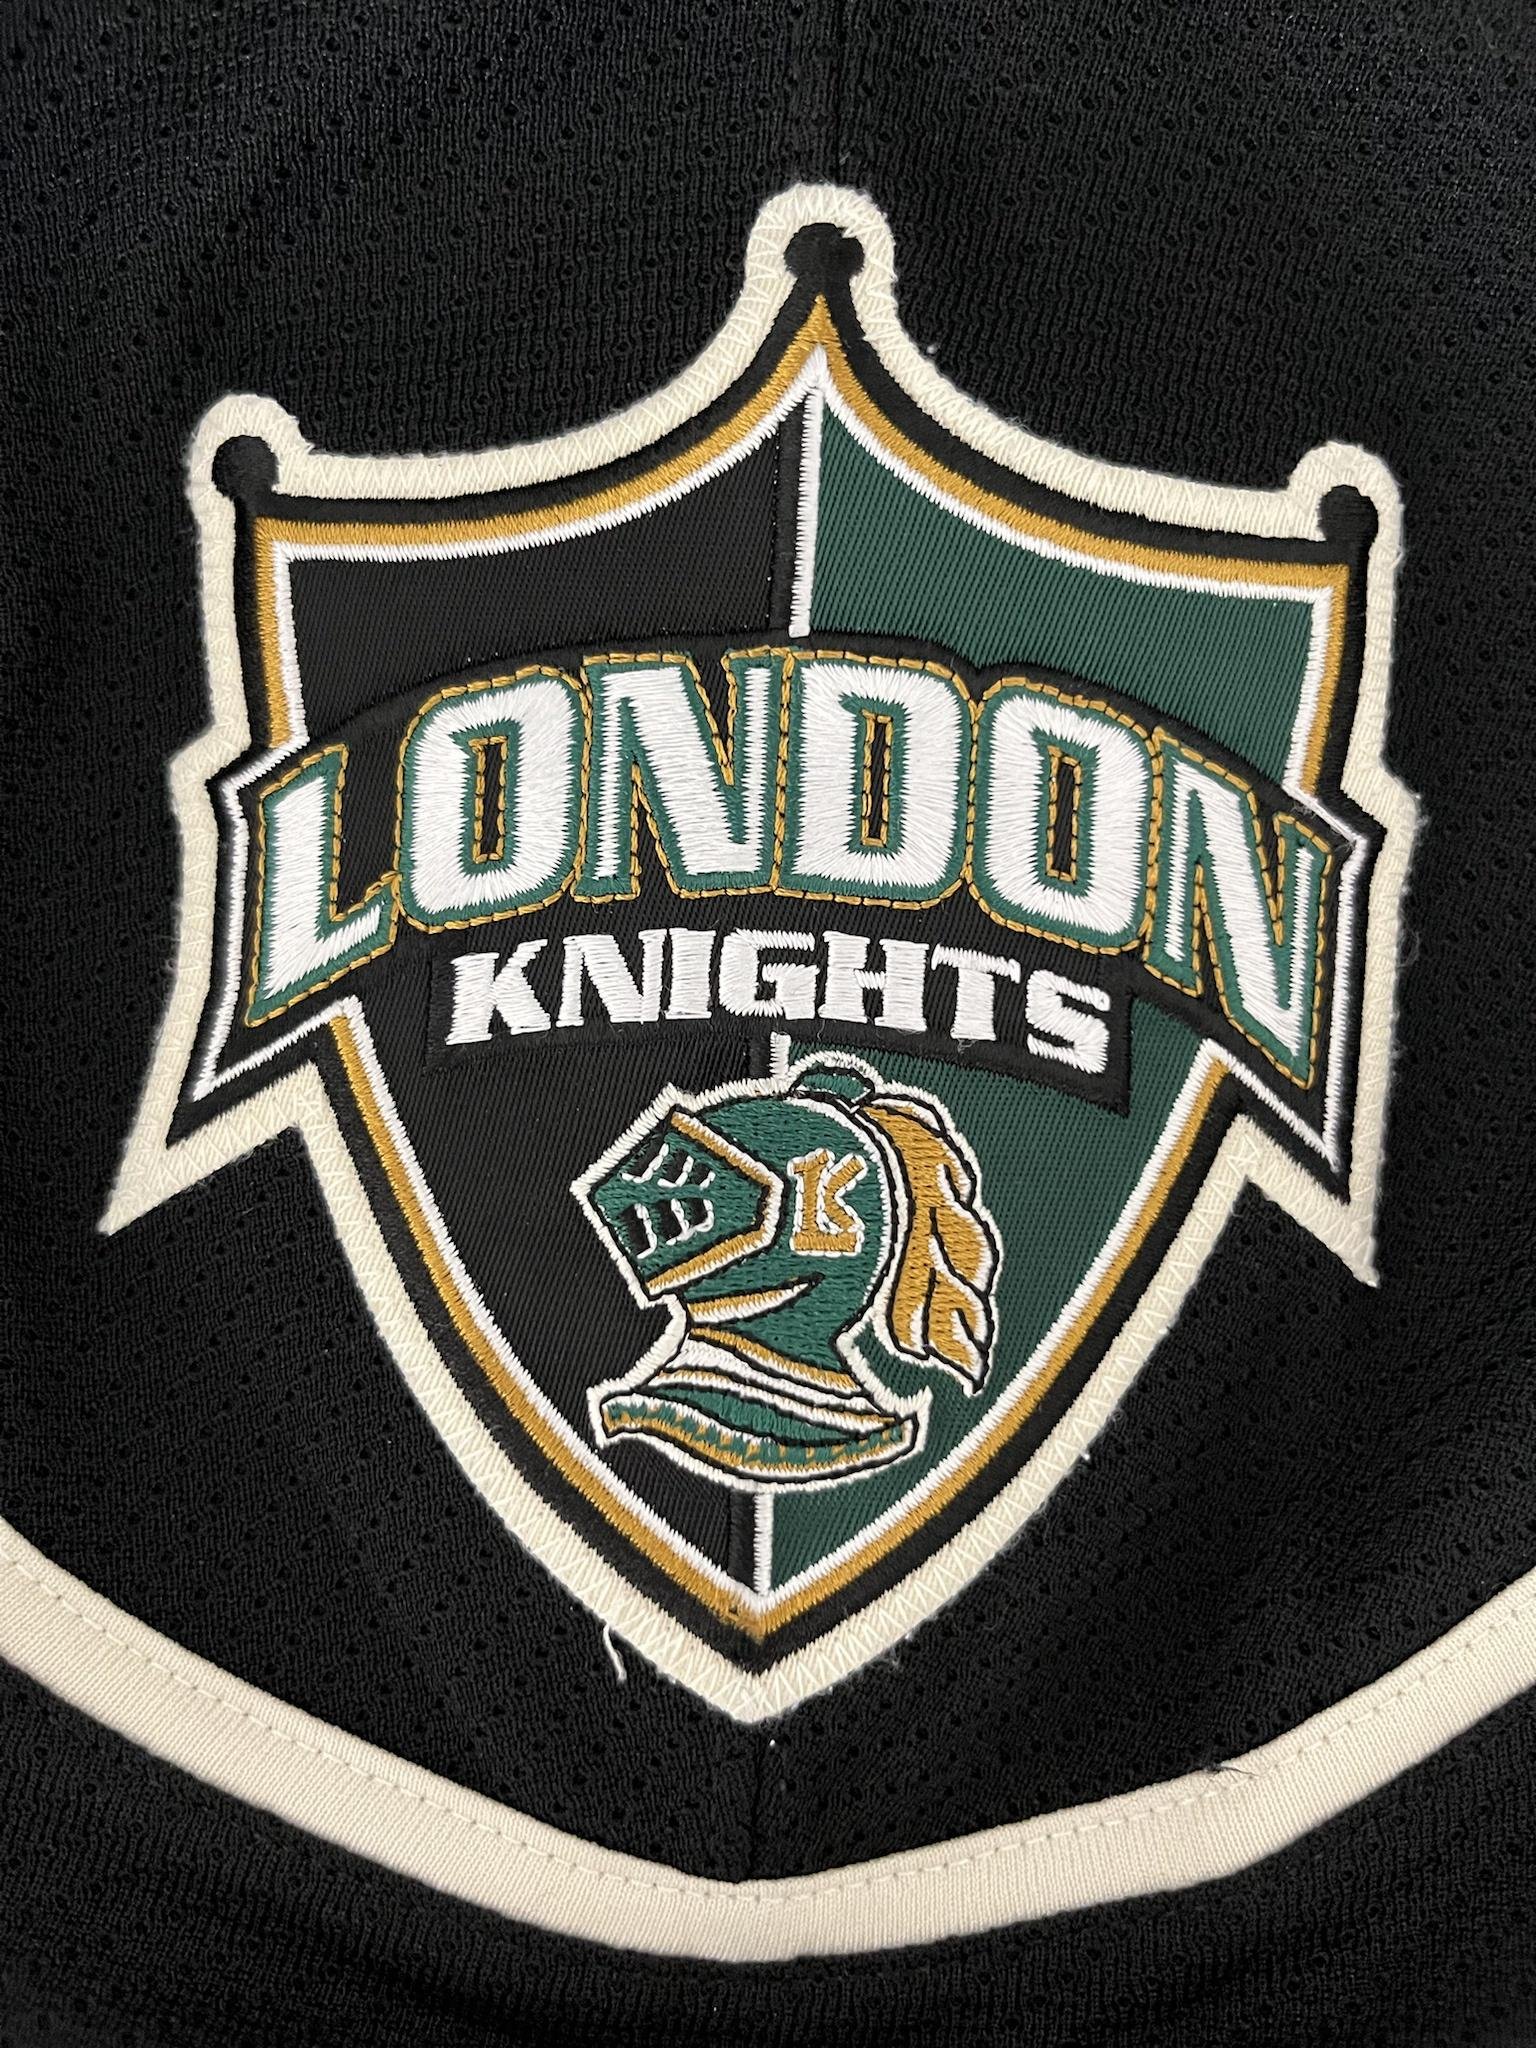 Mail Day] Connor McMichael Spider Knight London Knights alternate game  worn jersey : r/hockeyjerseys